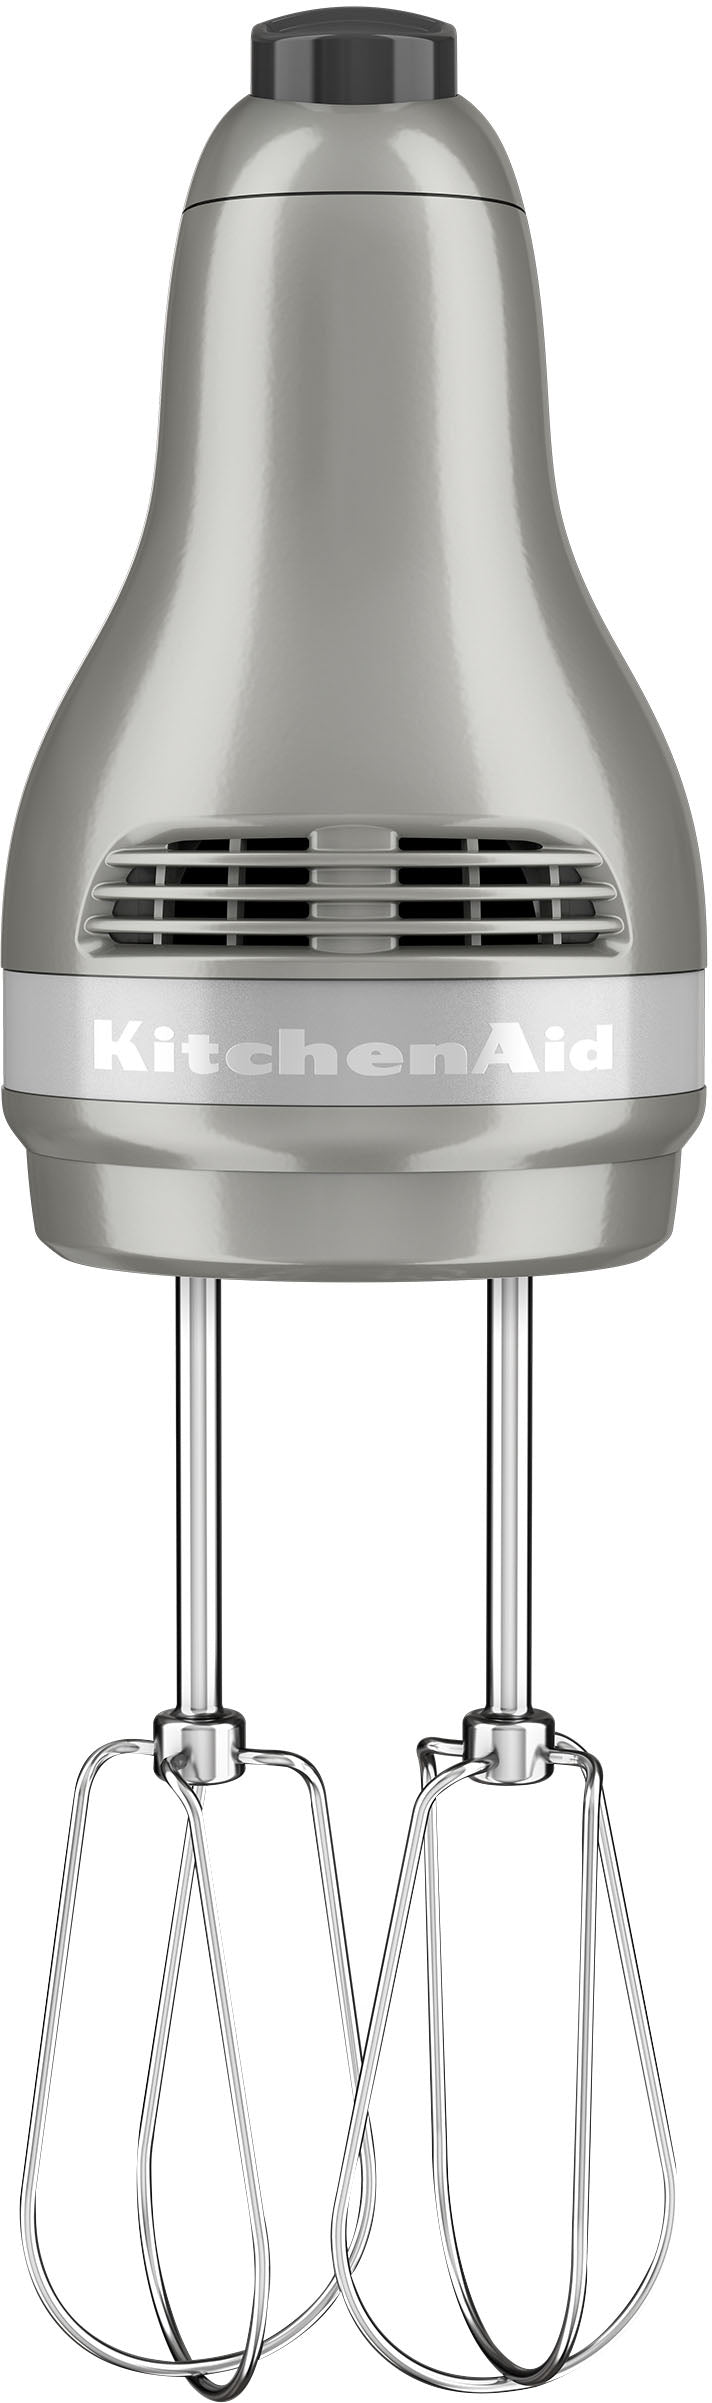 KitchenAid 5-Speed Ultra Power Hand Mixer - Contour Silver_2